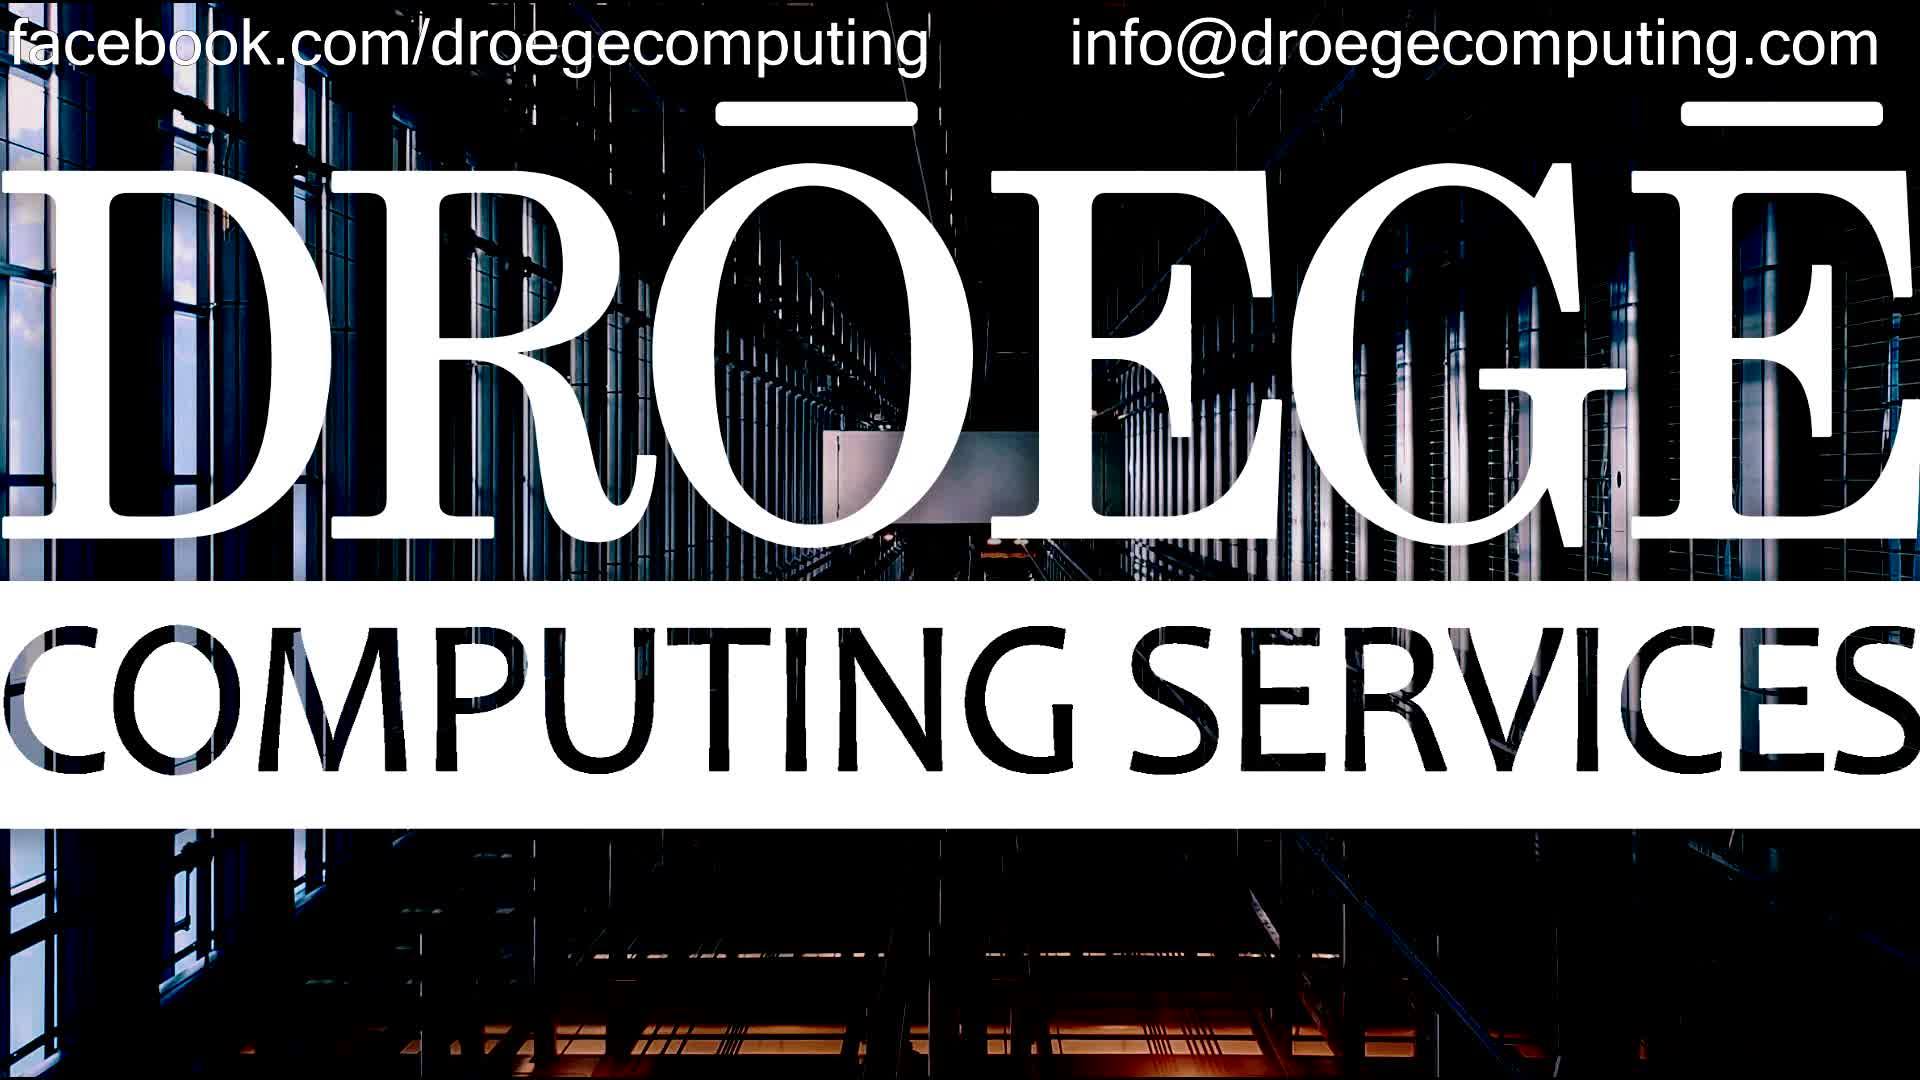 Droege Computing Services